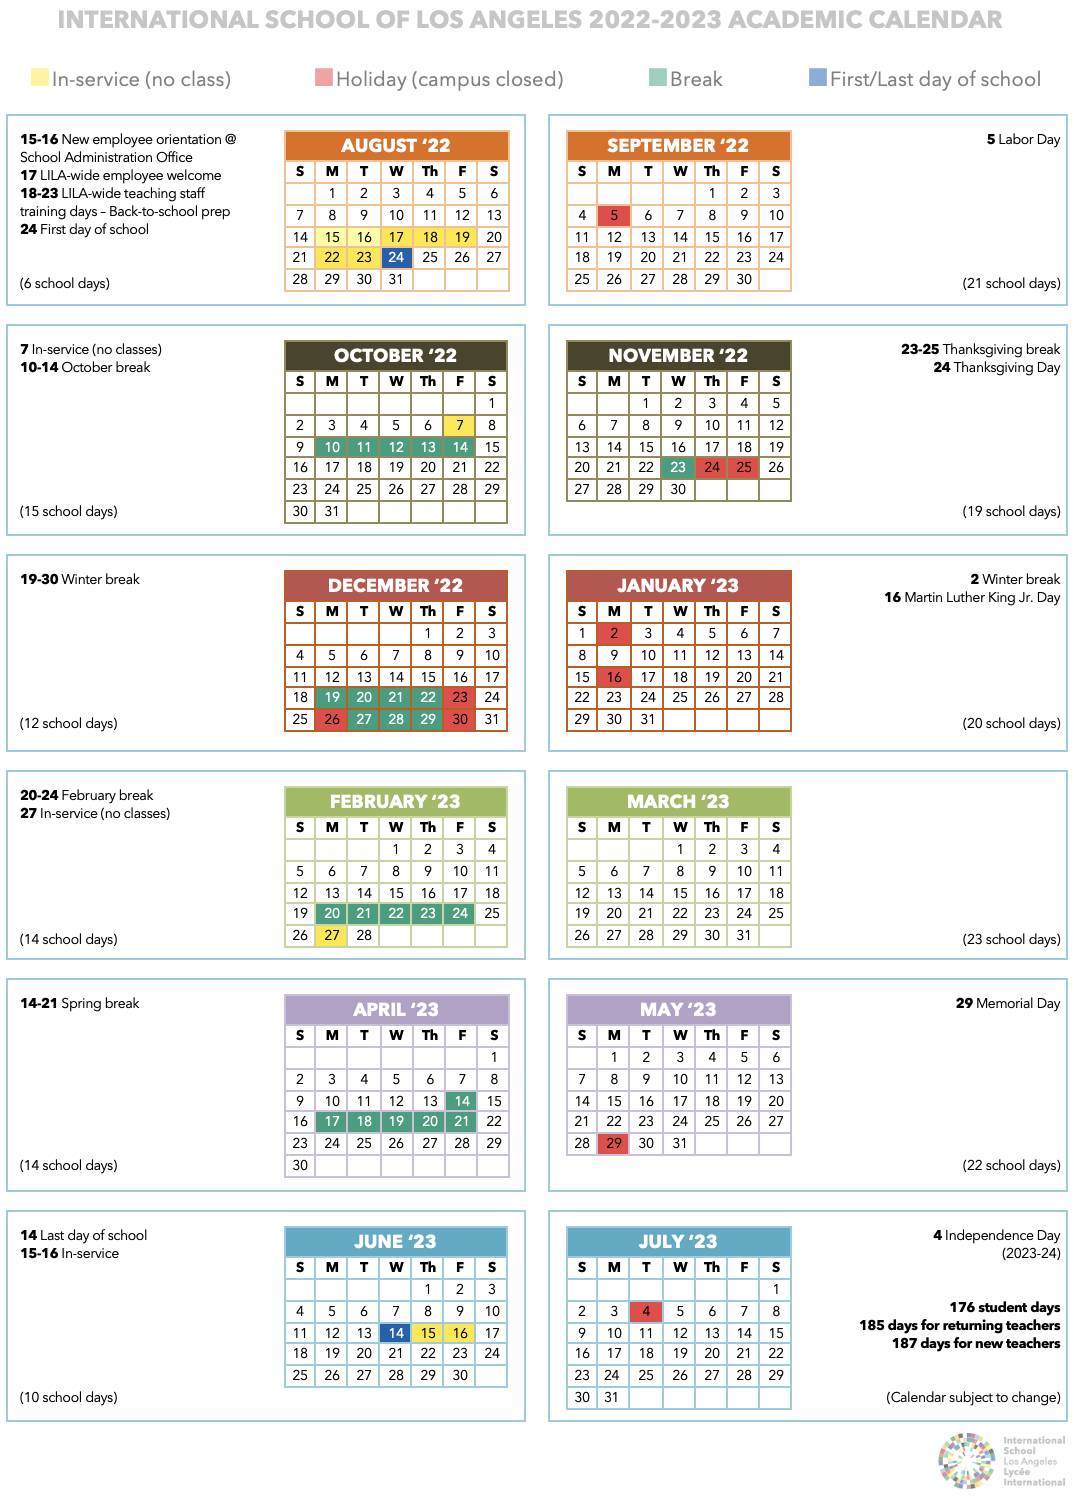 Csuf Calendar 2022 Calendar | International School Of Los Angeles